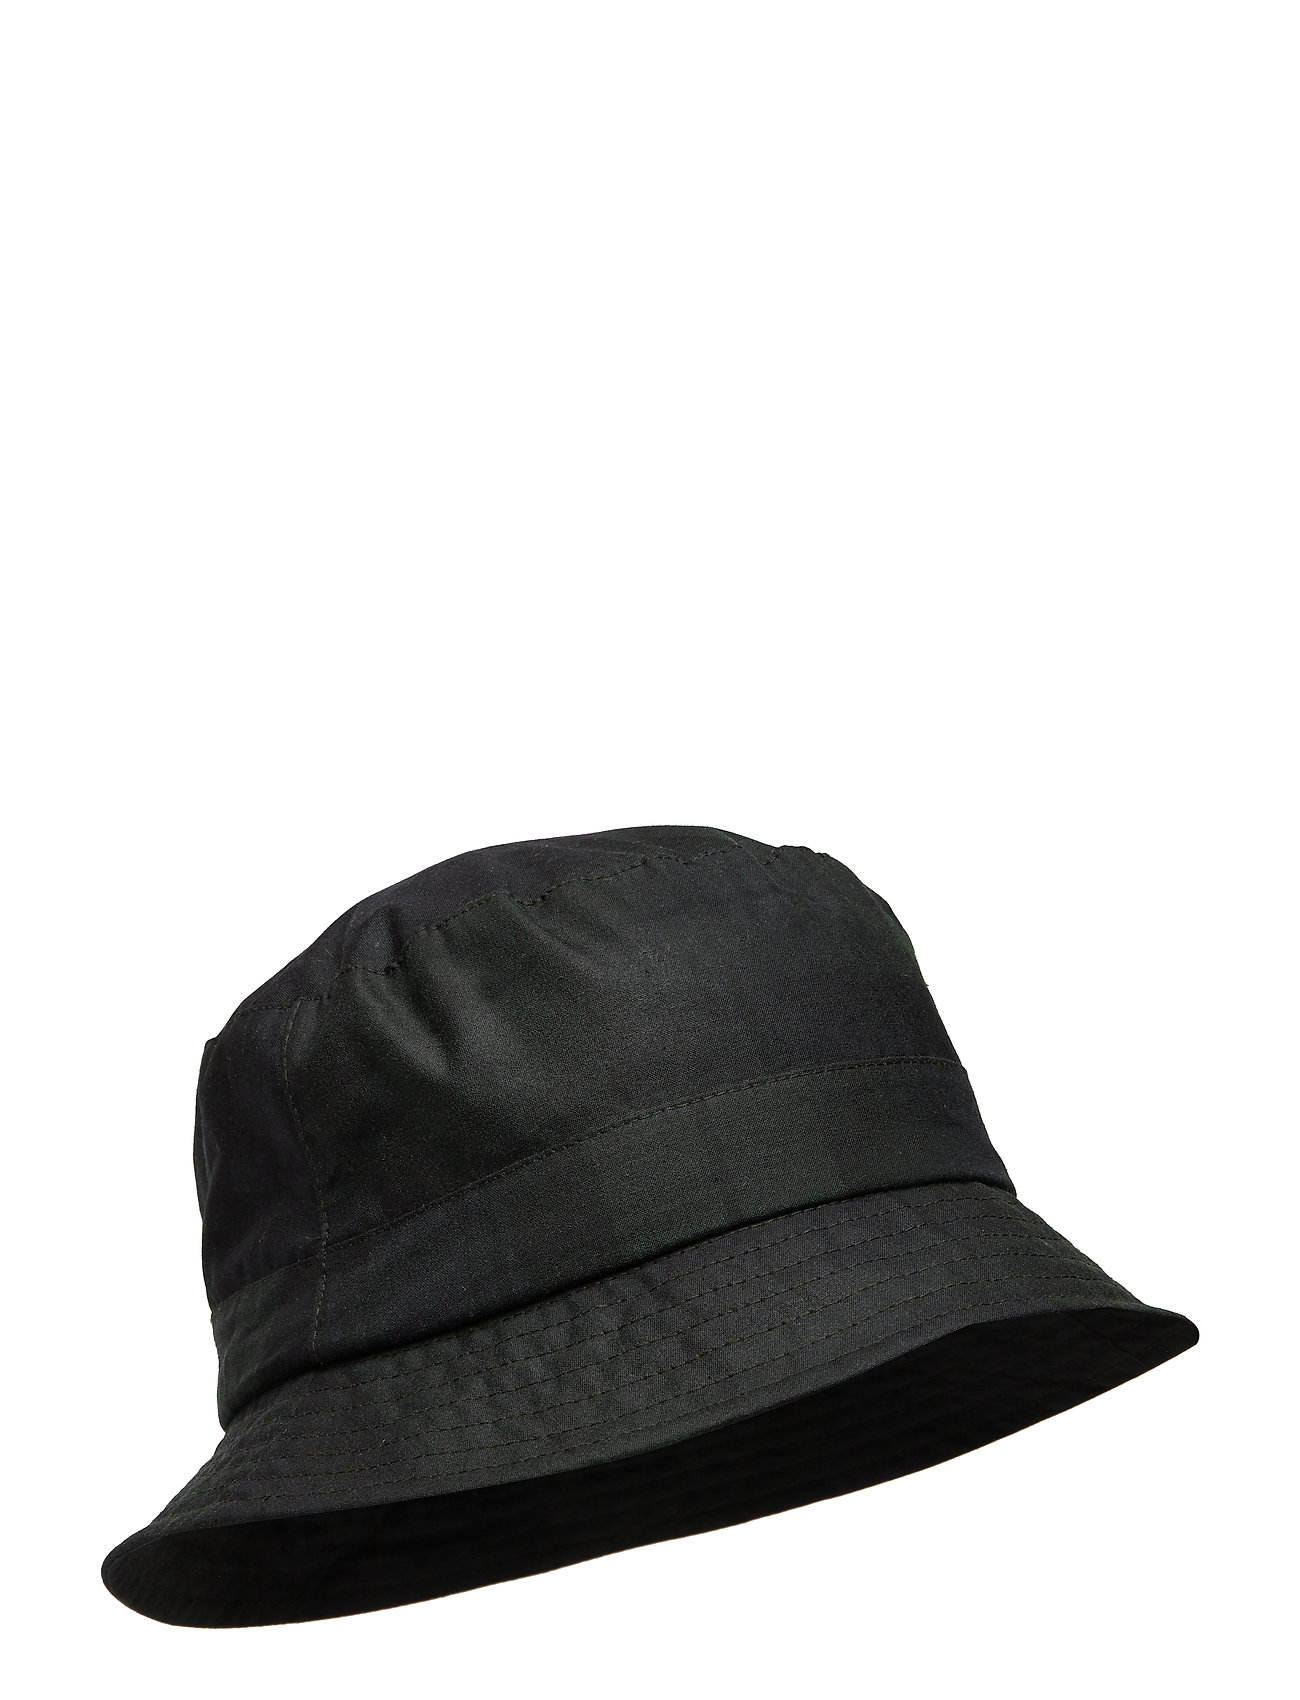 Barbour Darwen Spt Hat Accessories Headwear Hats Musta Barbour